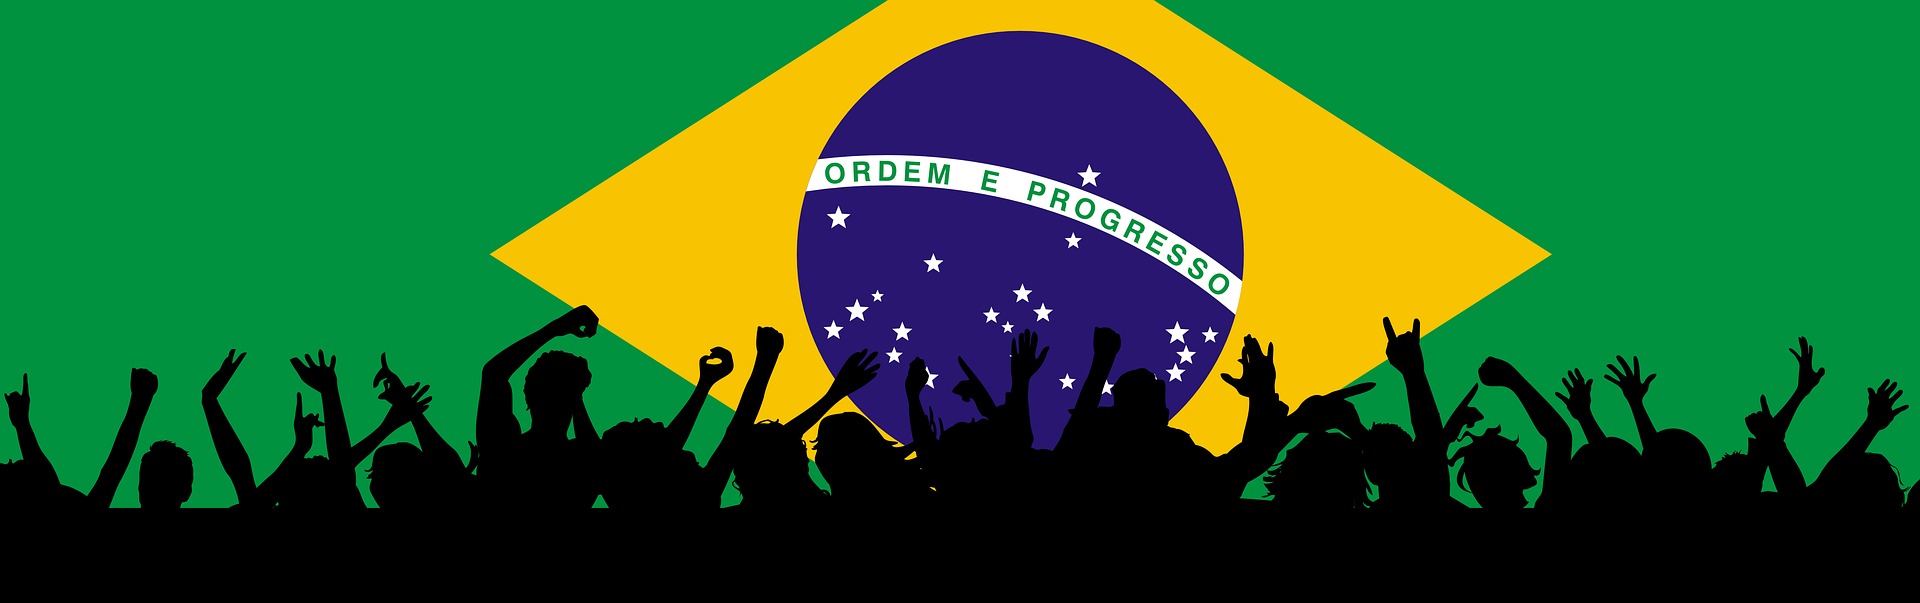 Bandeira nacional patriótica do Brasil. Cortesia de Pete Linforth e Pixabay